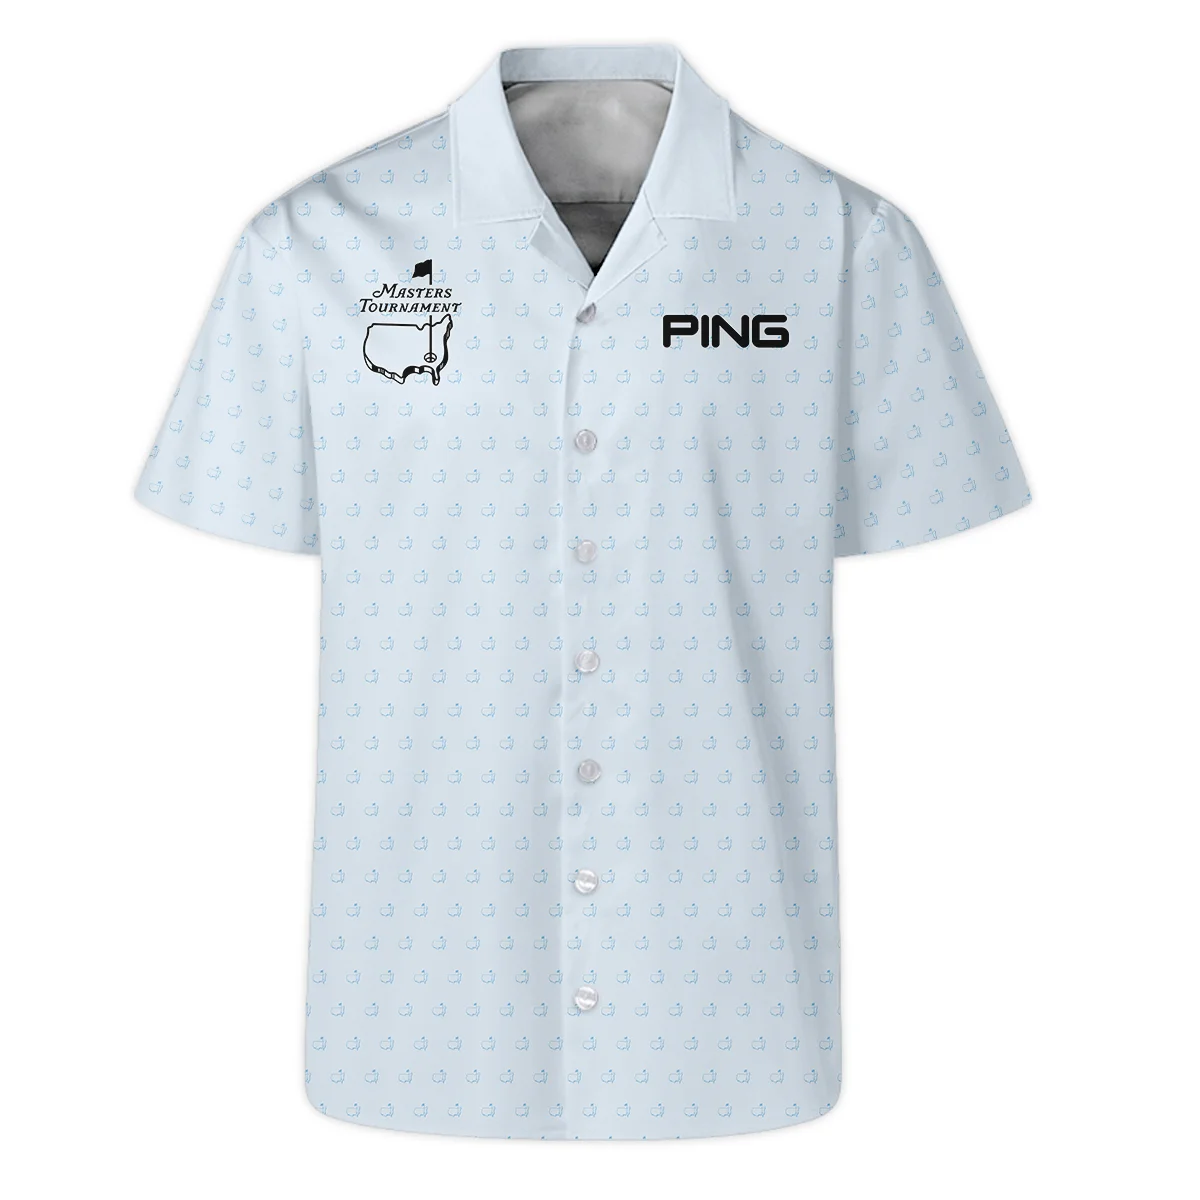 Pattern Masters Tournament Ping Polo Shirt White Light Blue Color Pattern Logo  Polo Shirt For Men